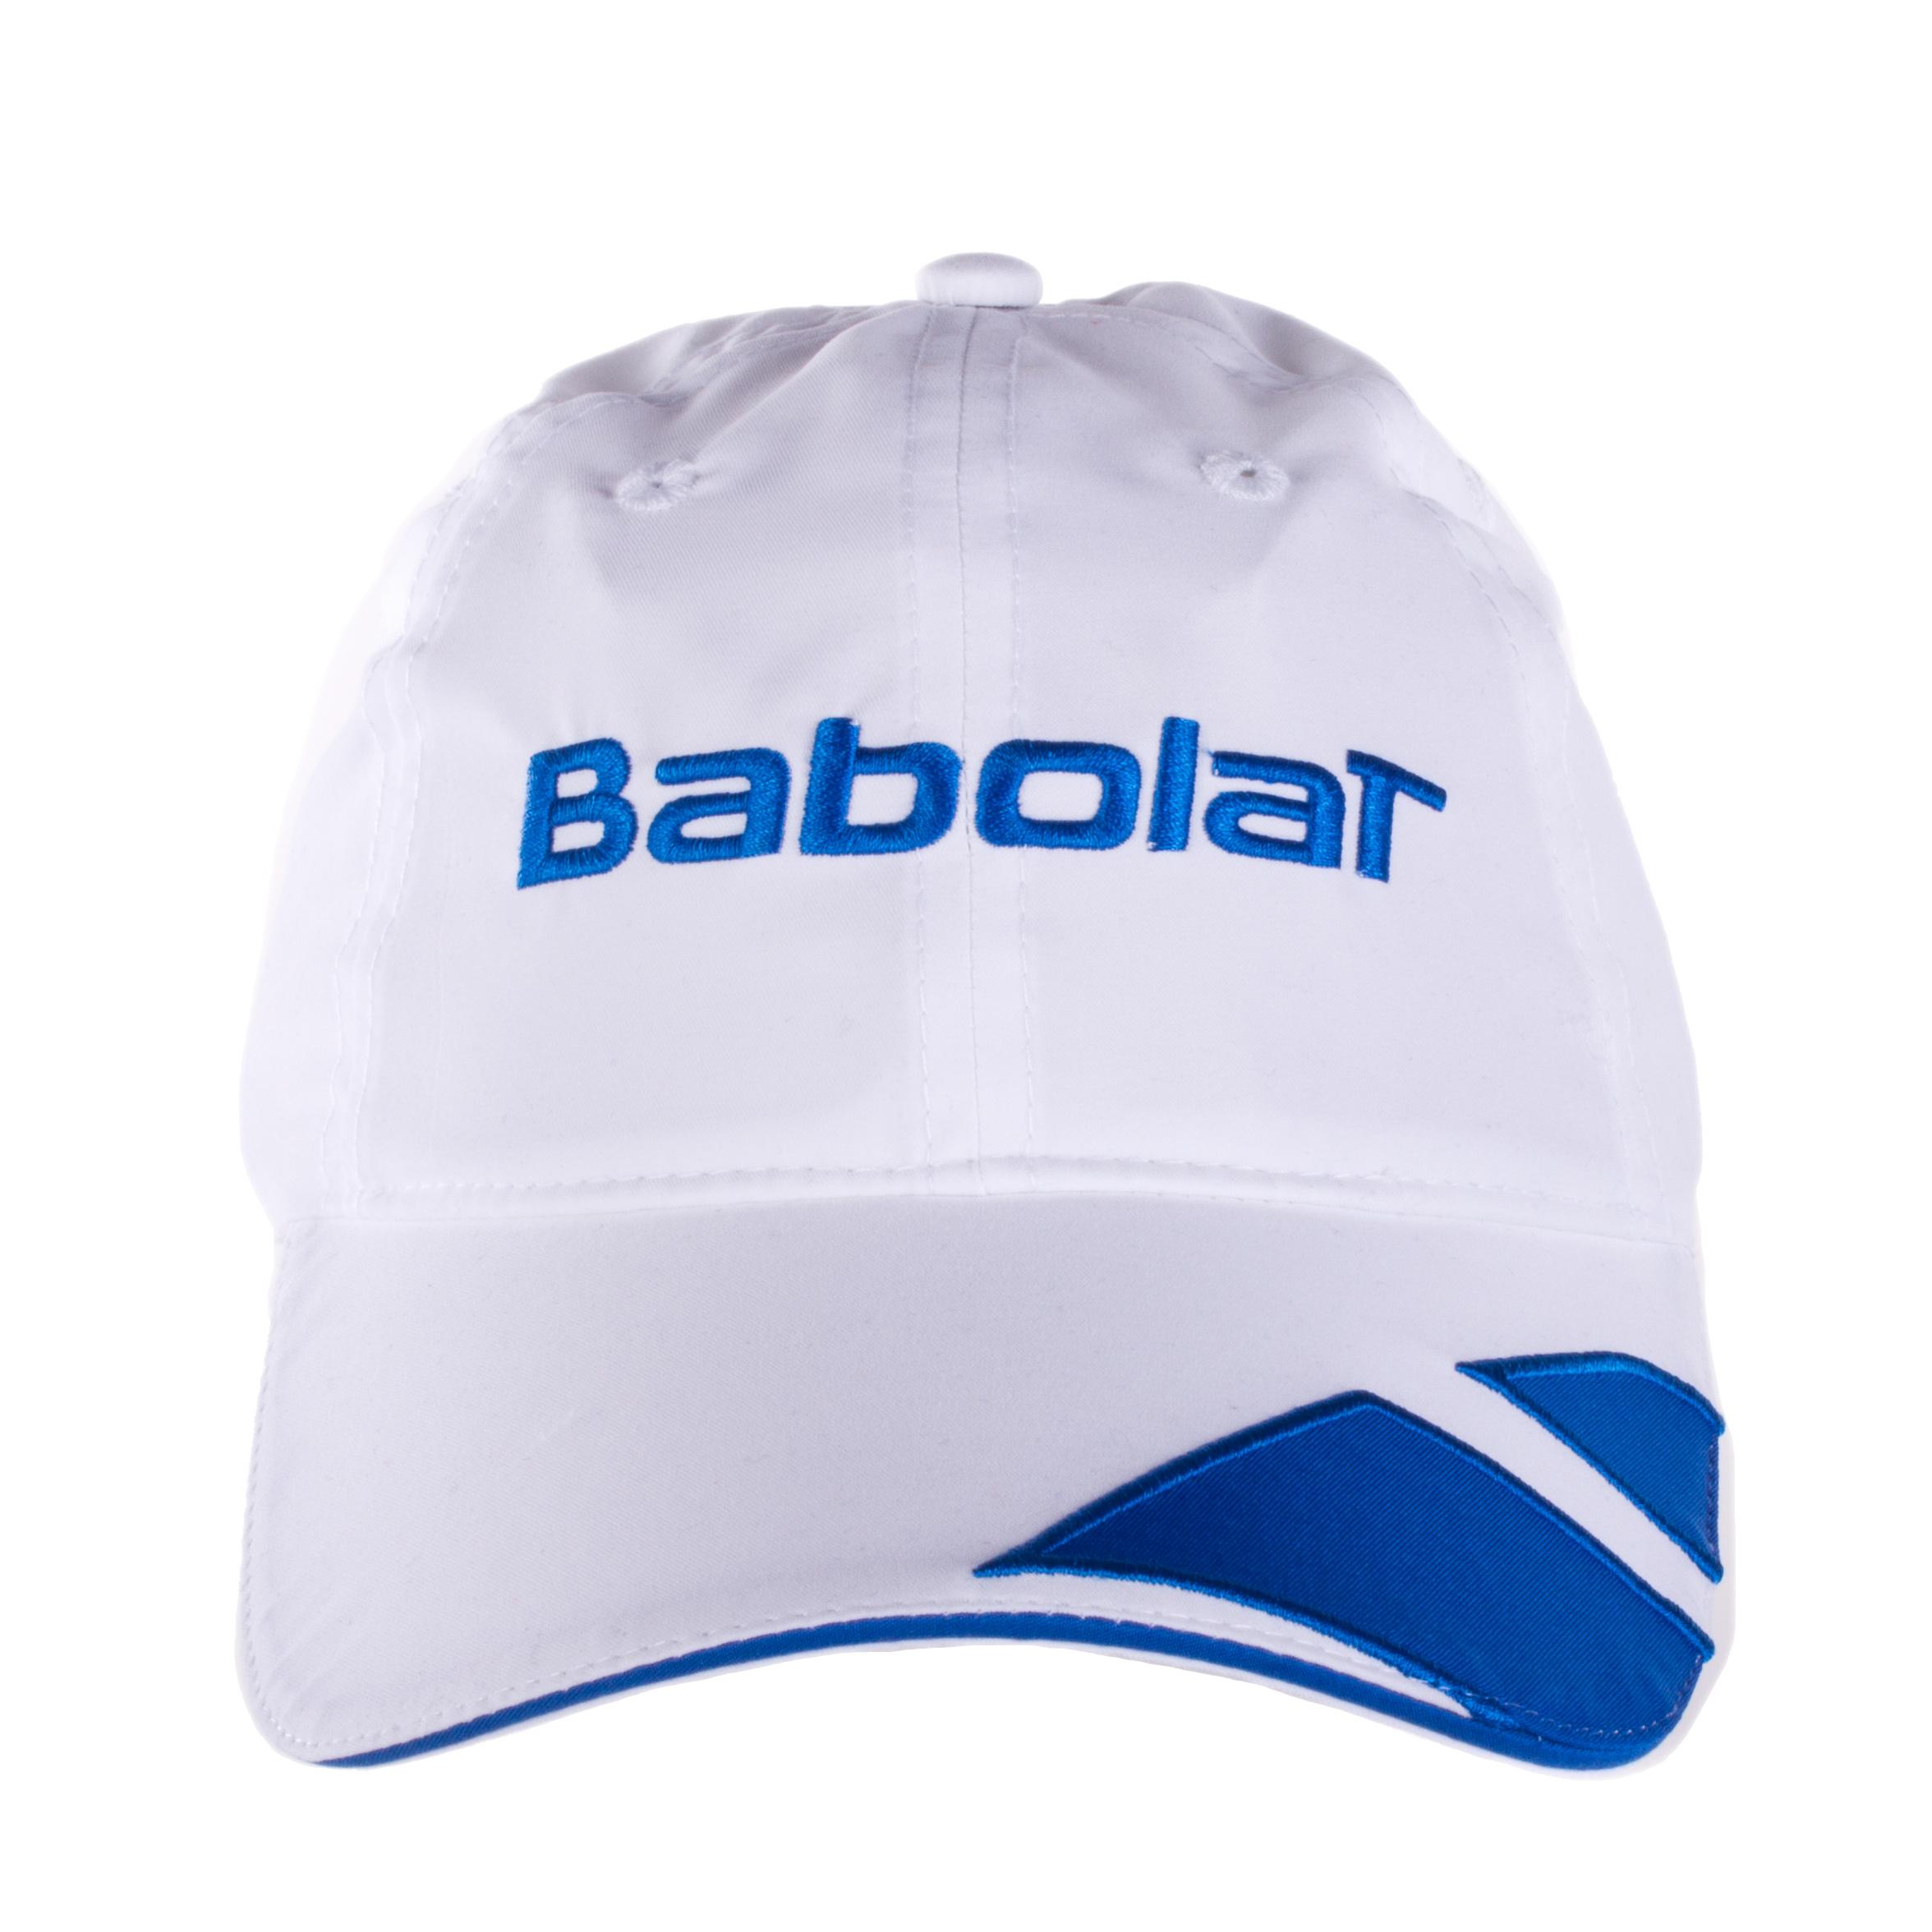 babolat tennis cap,Quality assurance,protein-burger.com